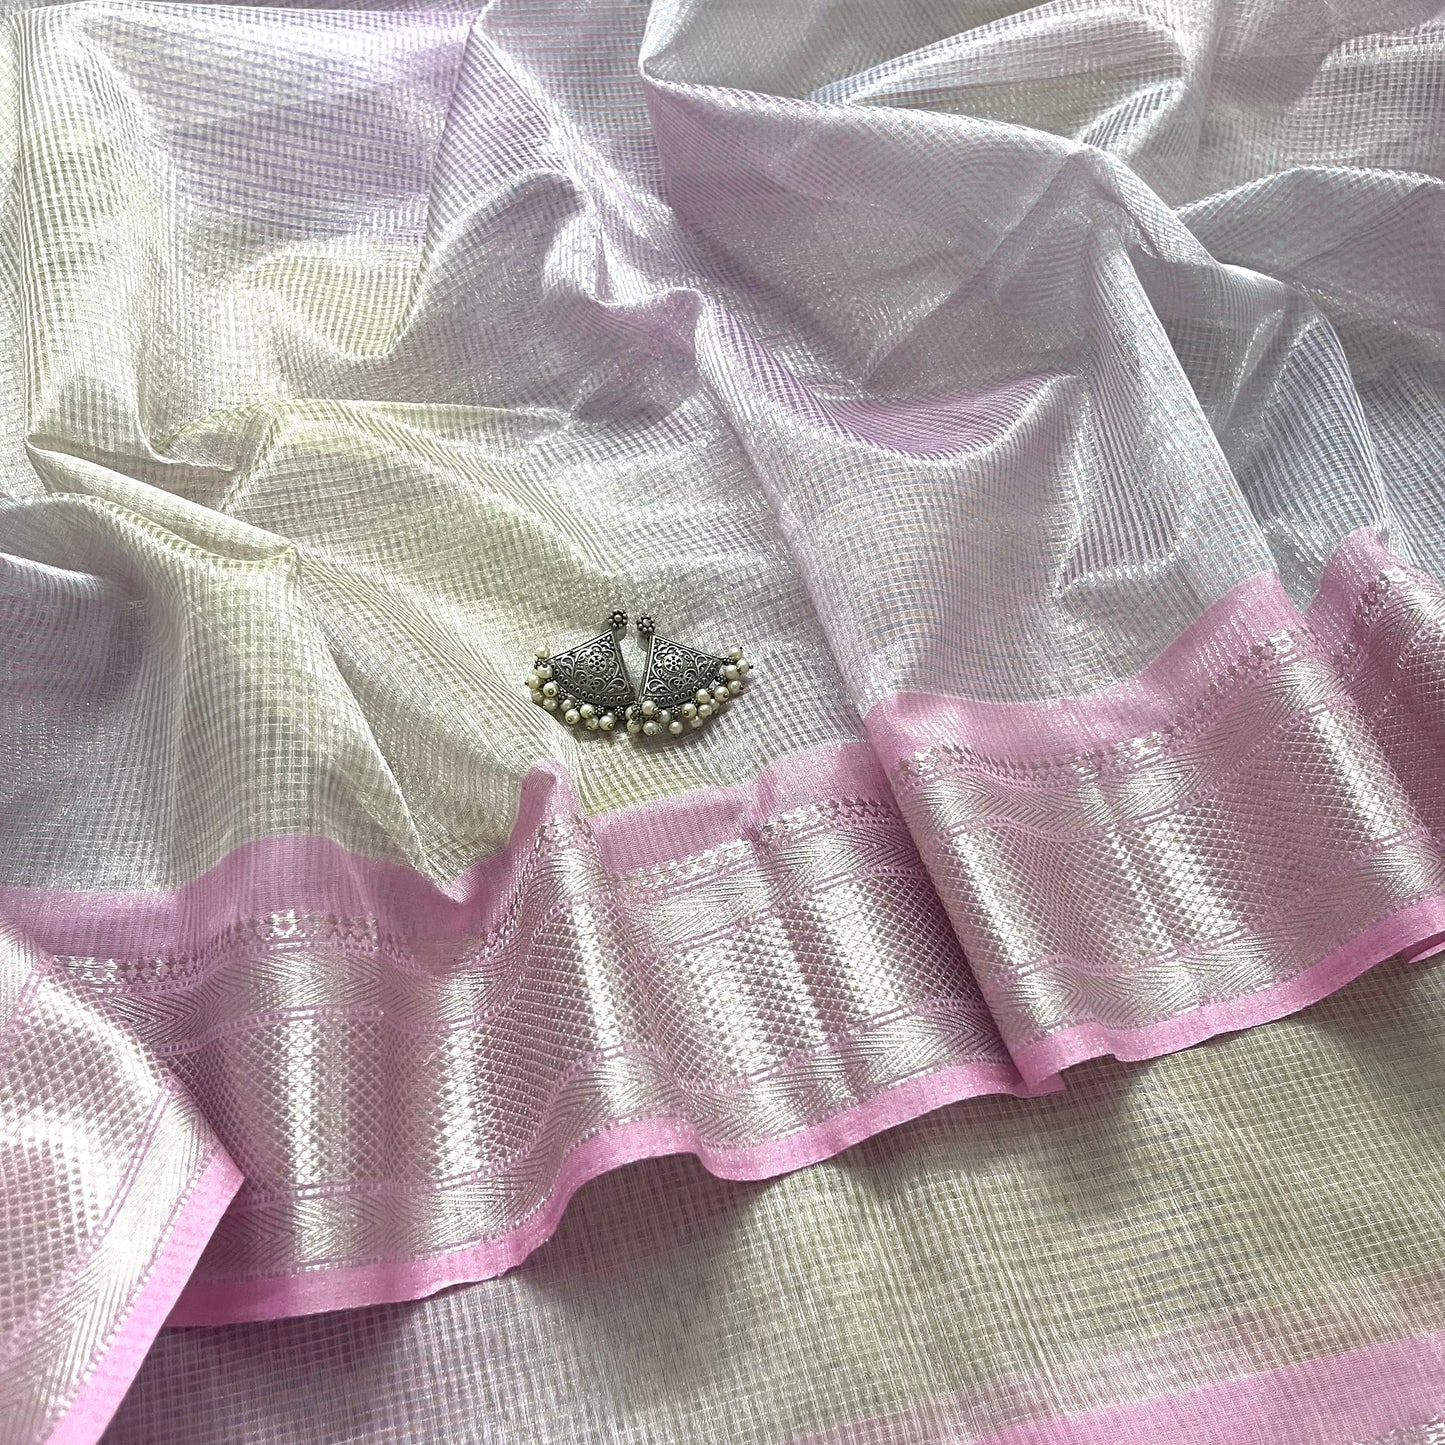 Pink and grey shaded maheshwari saree with zari lines all over